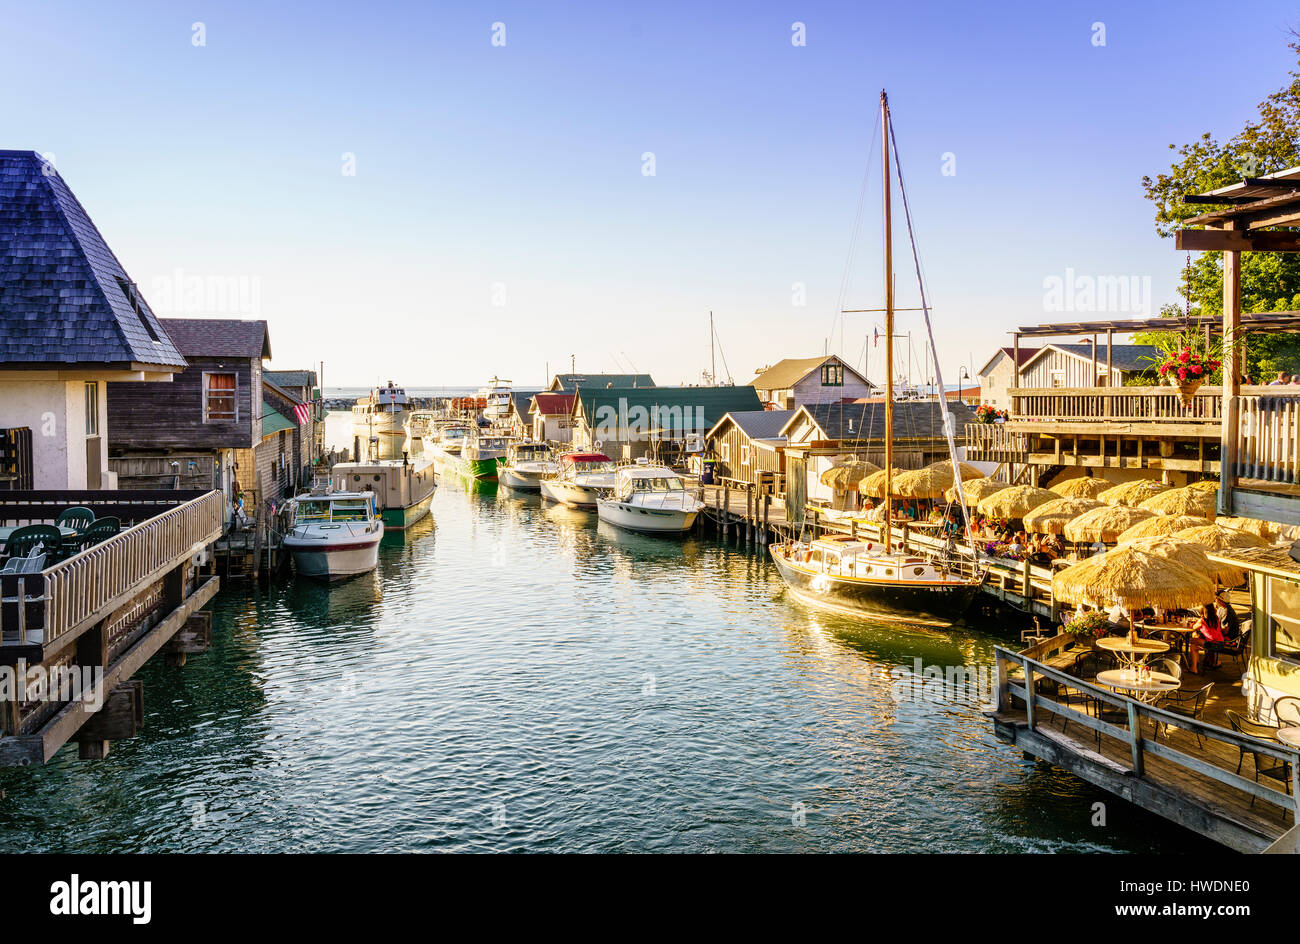 Leland, Michigan, August 8, 2016: Fishtown docks in Leland, Michigan - a popular summer vacation destination Stock Photo